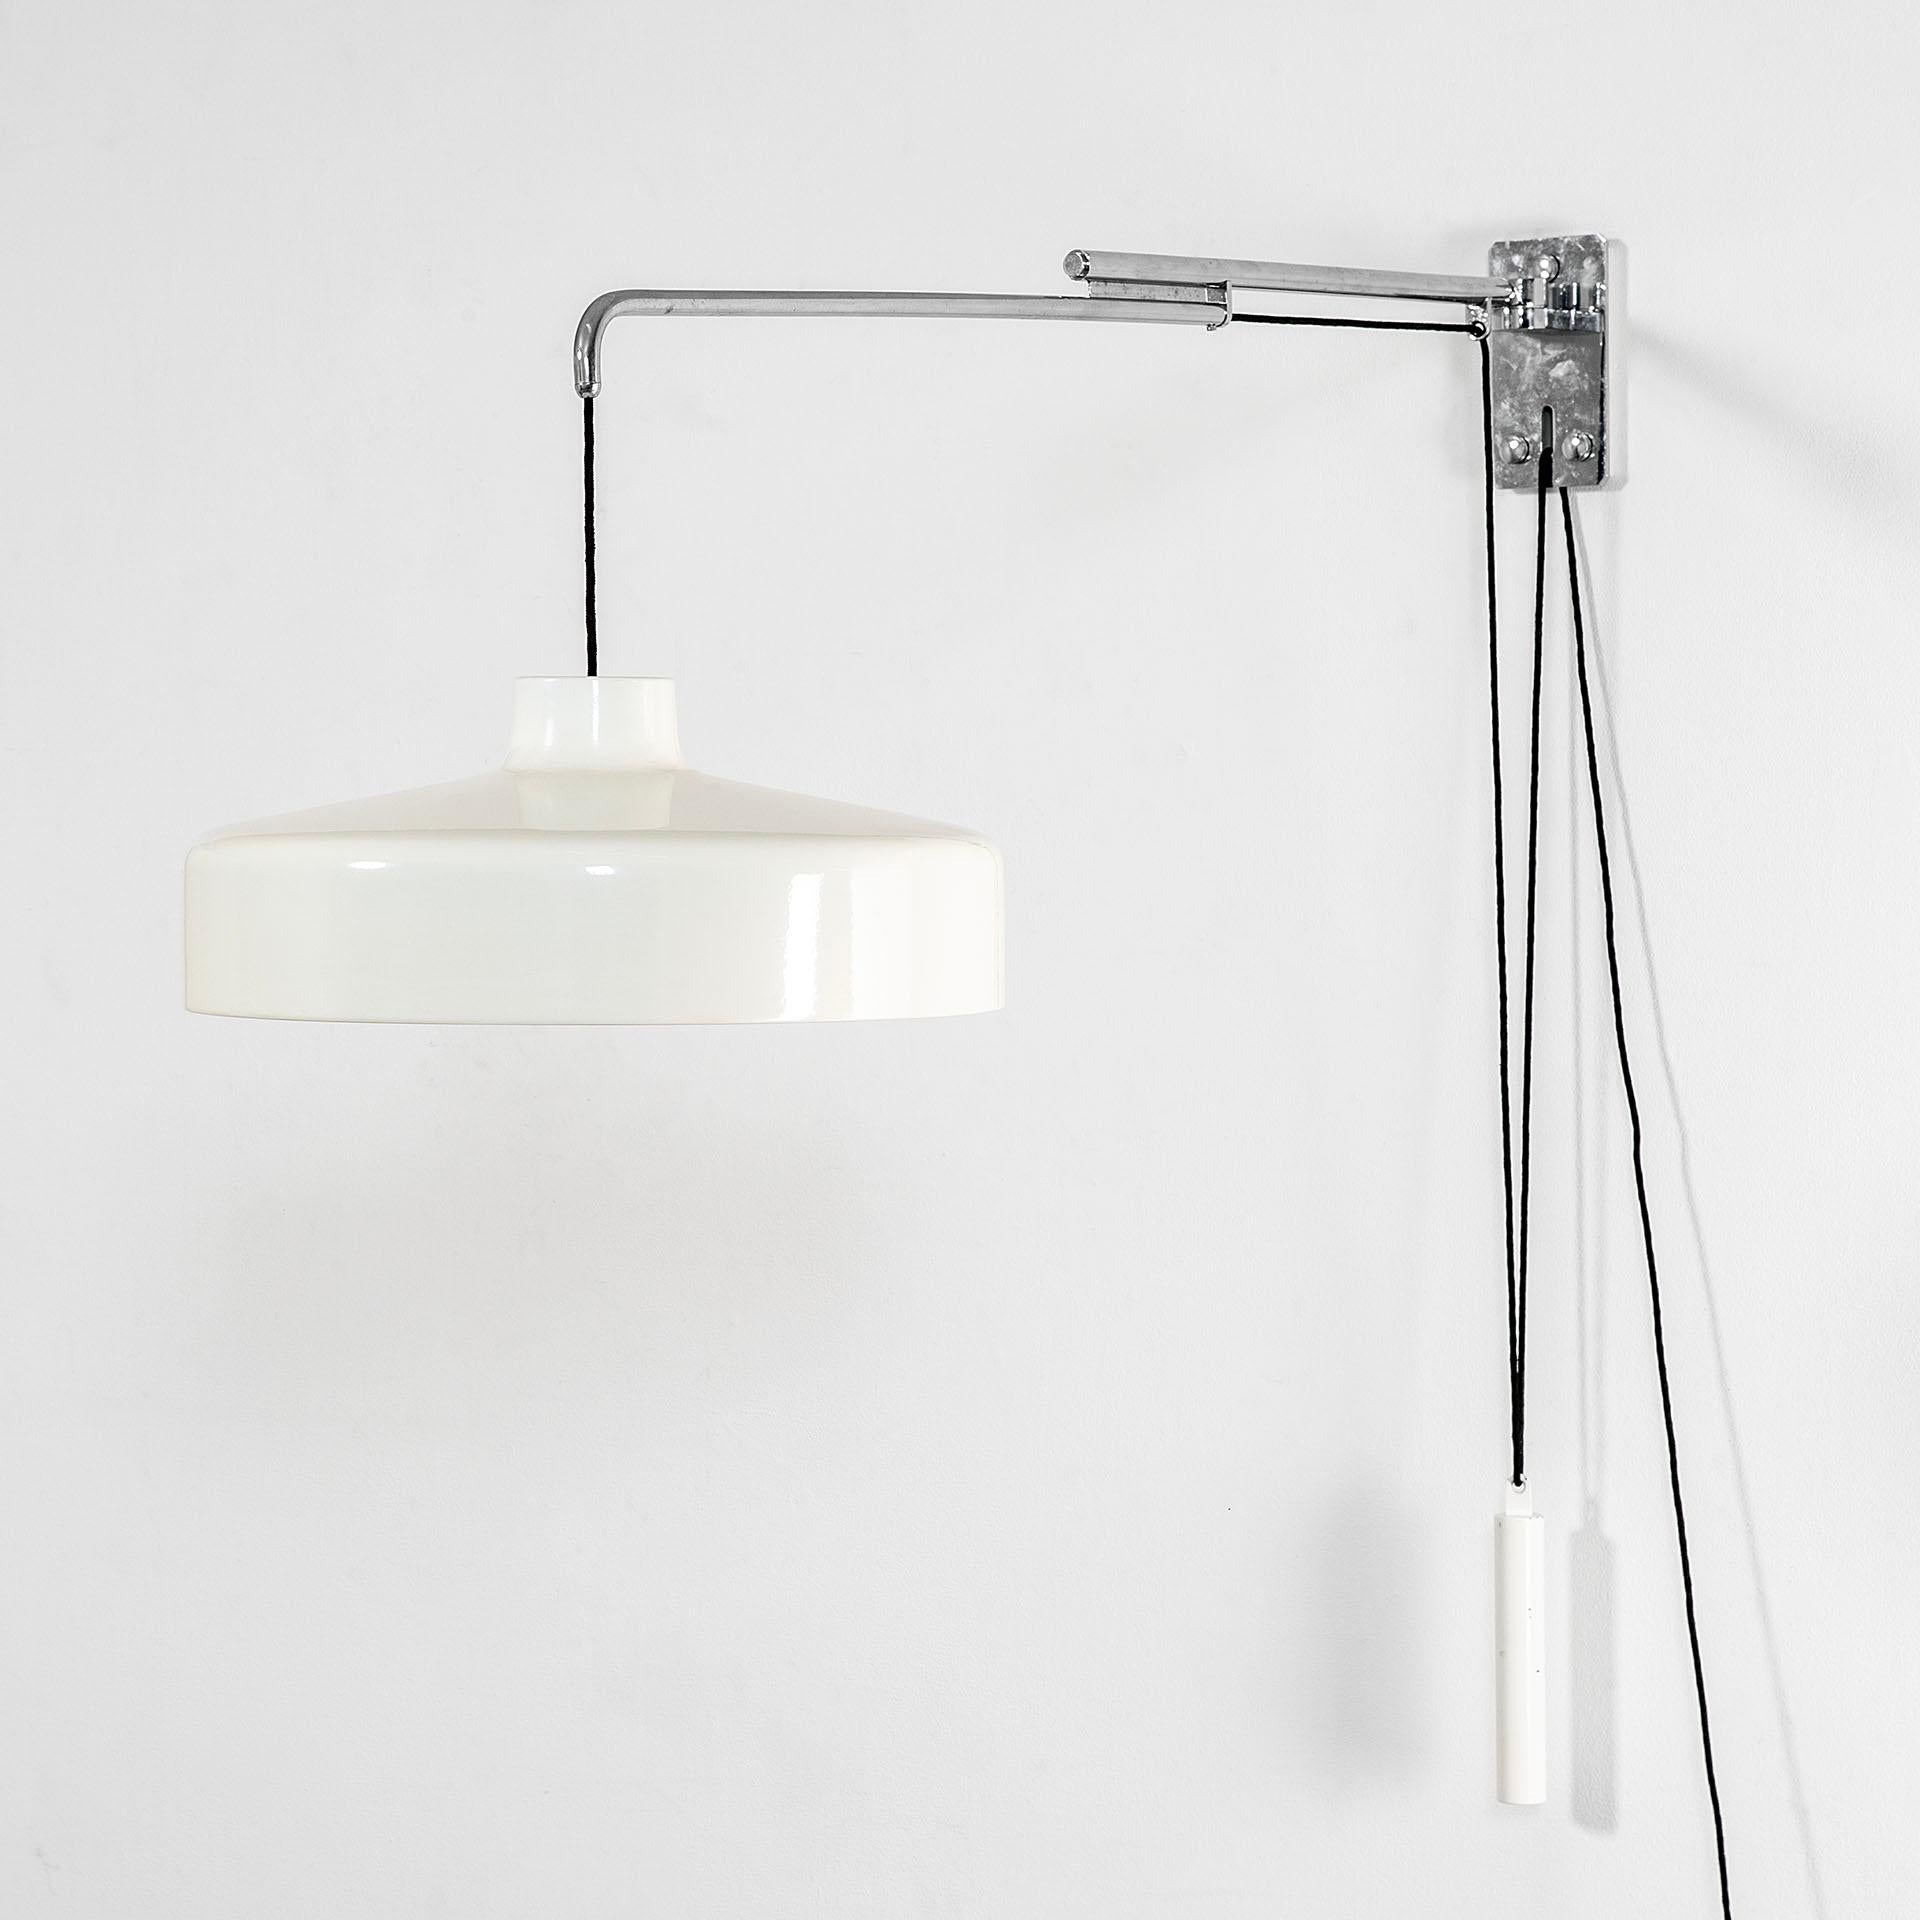 Italian 20th Century Gino Sarfatti Adjustable Wall Lamp Mod. 194 for Arteluce, 1950s For Sale